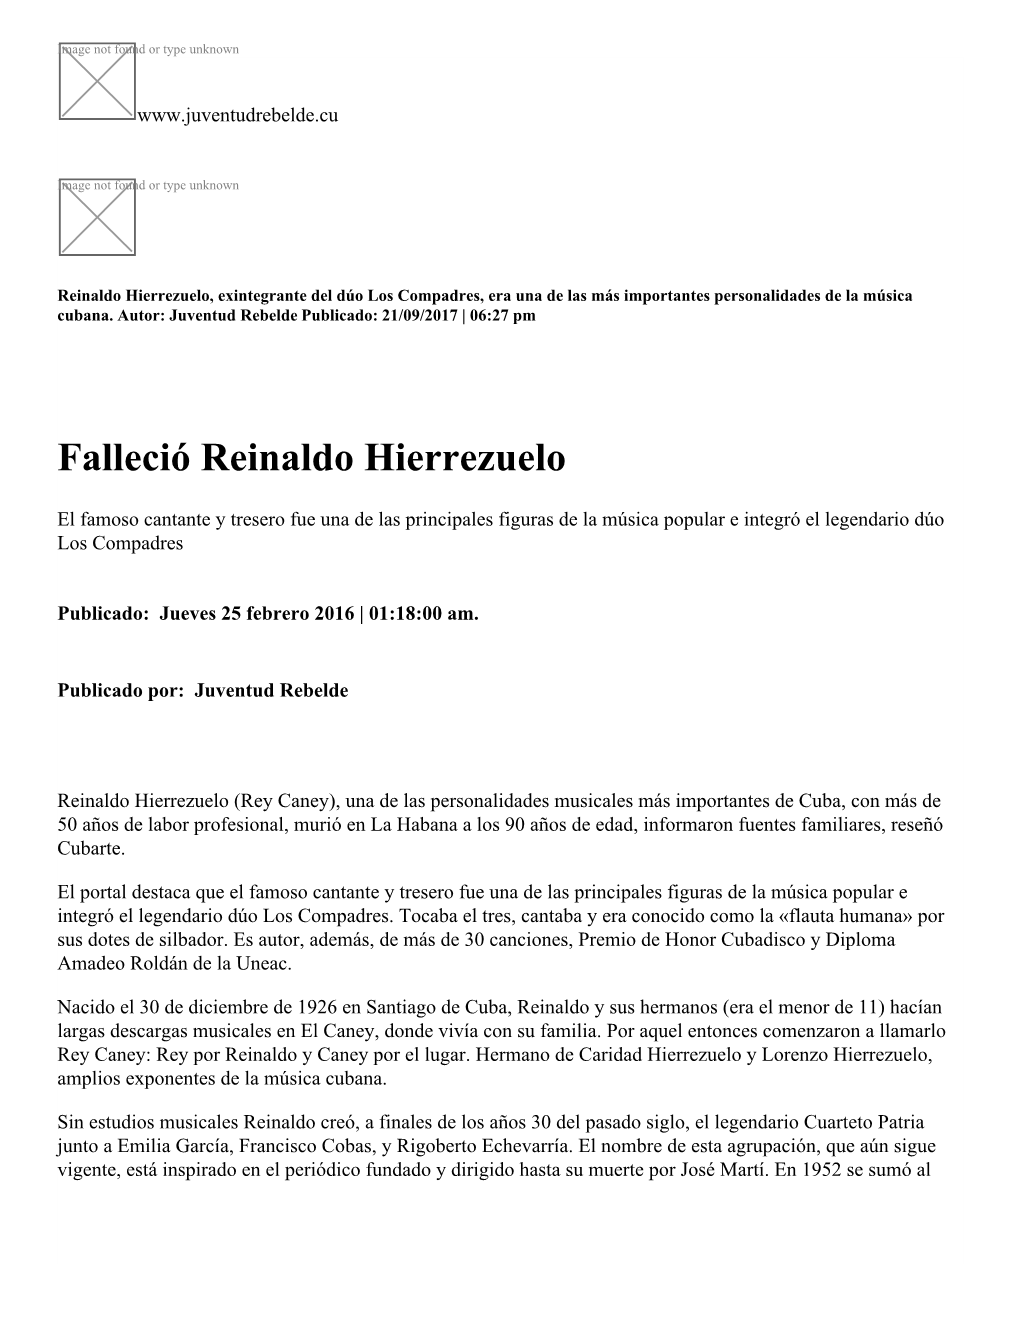 Falleció Reinaldo Hierrezuelo